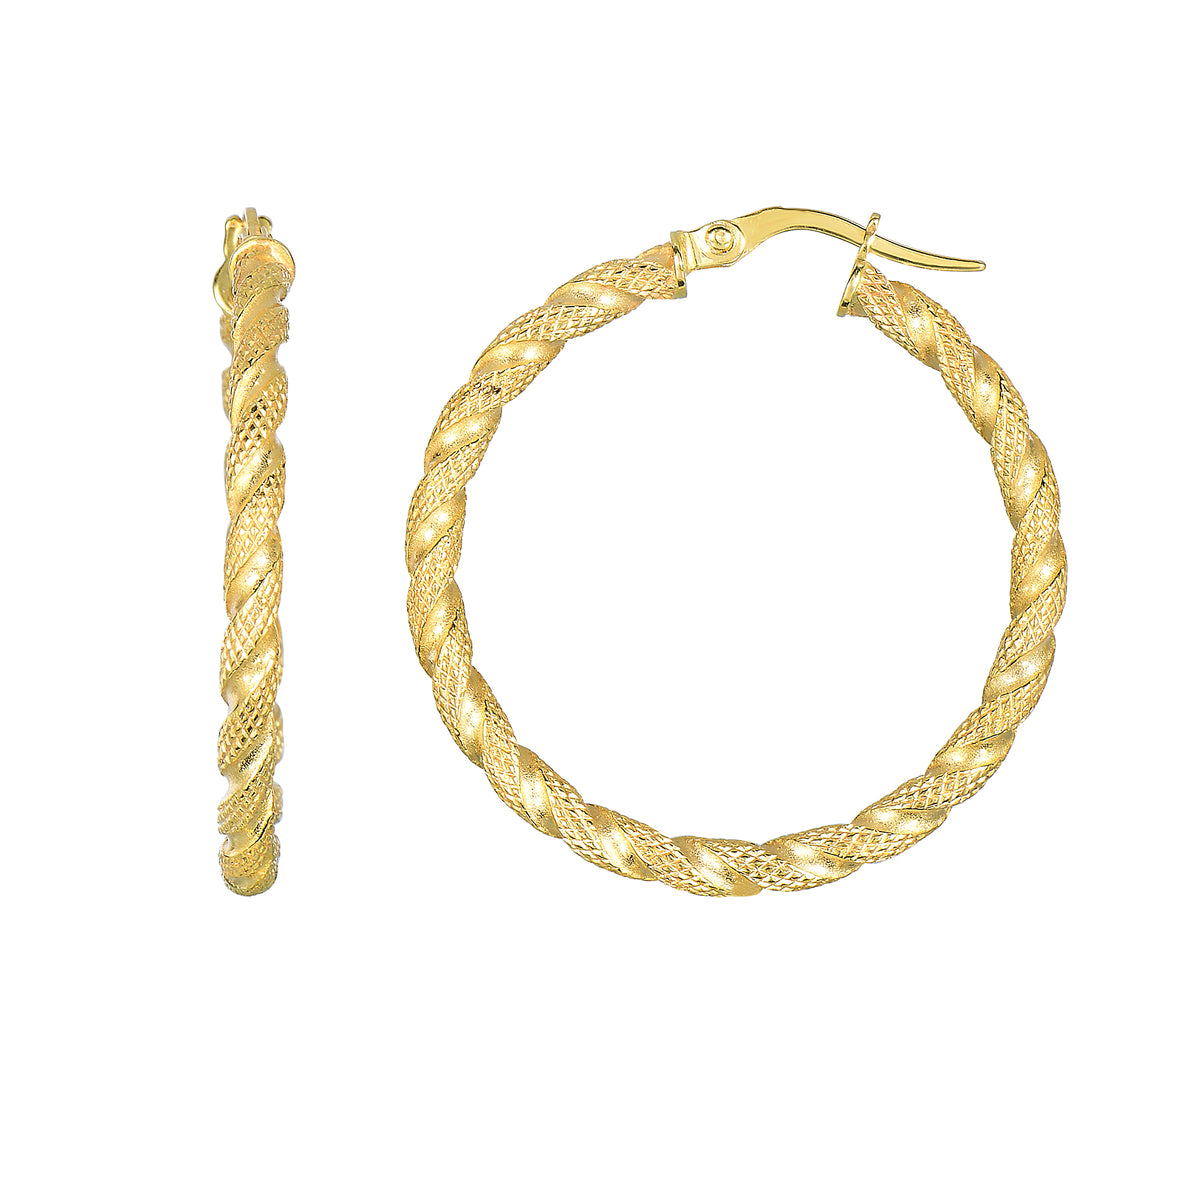 14K Yellow Gold Matt Textured Round Hoop Earrings, Diameter 30mm